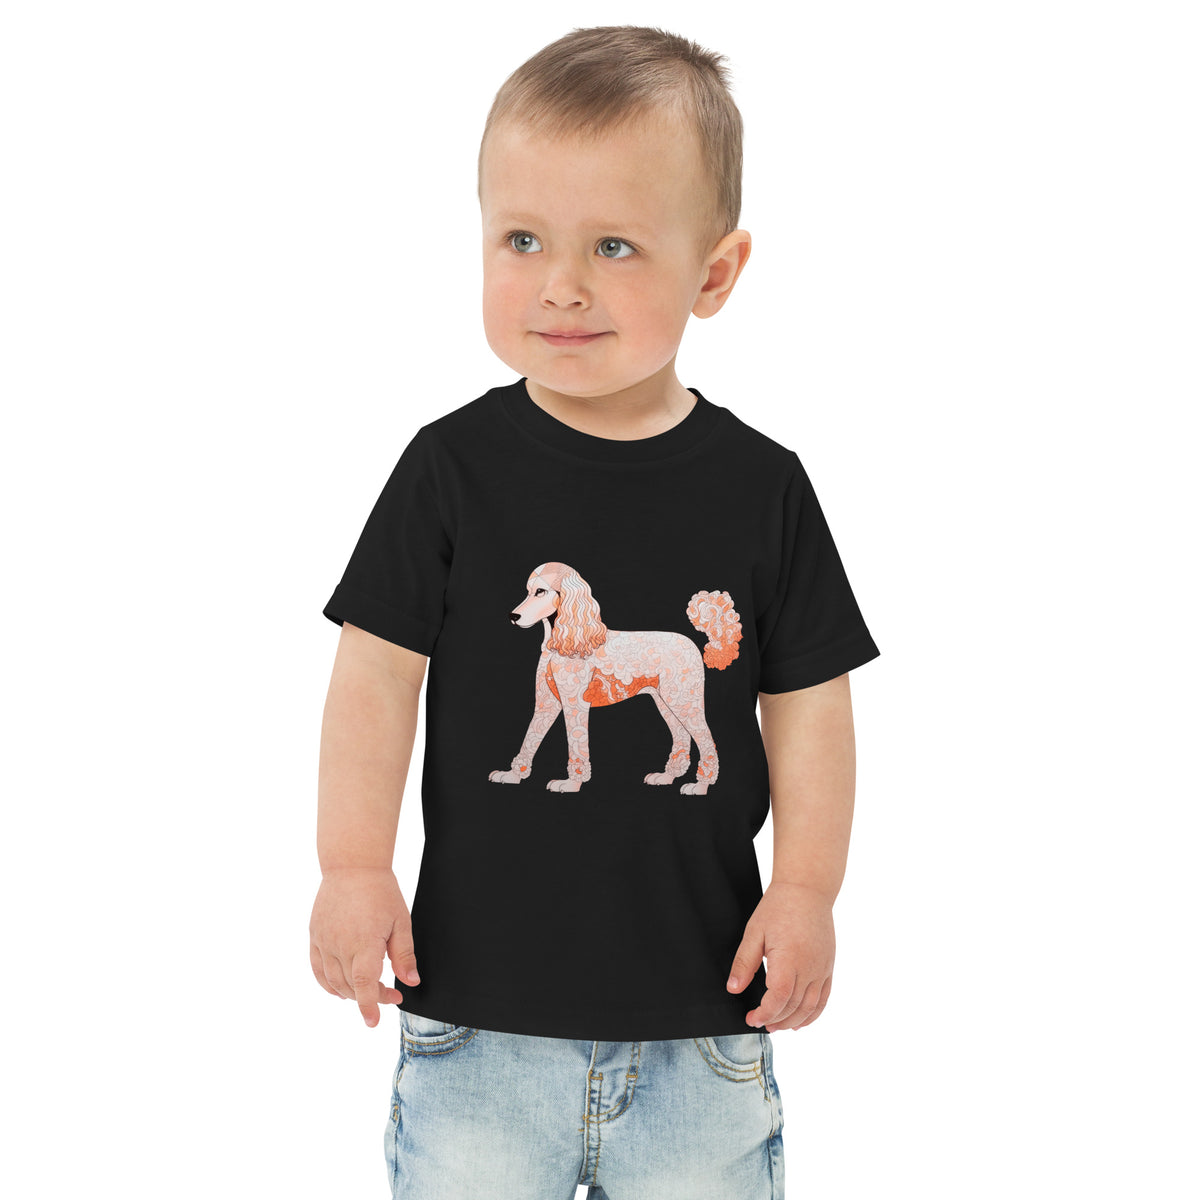 Poodle’s Gentle Gaze Toddler T-Shirt